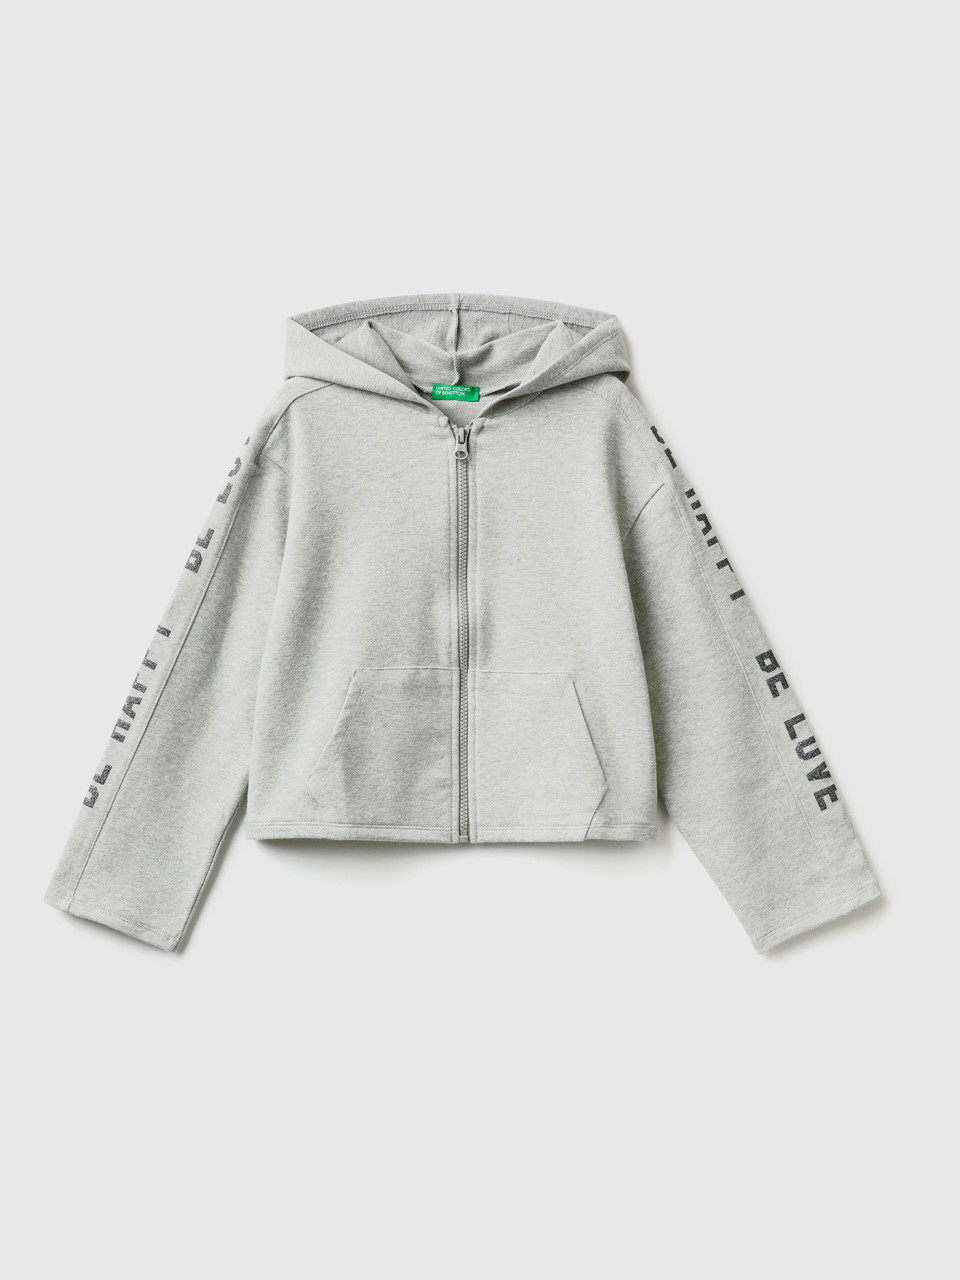 Benetton, Warm Boxy Fit Sweatshirt With Print, Light Gray, Kids